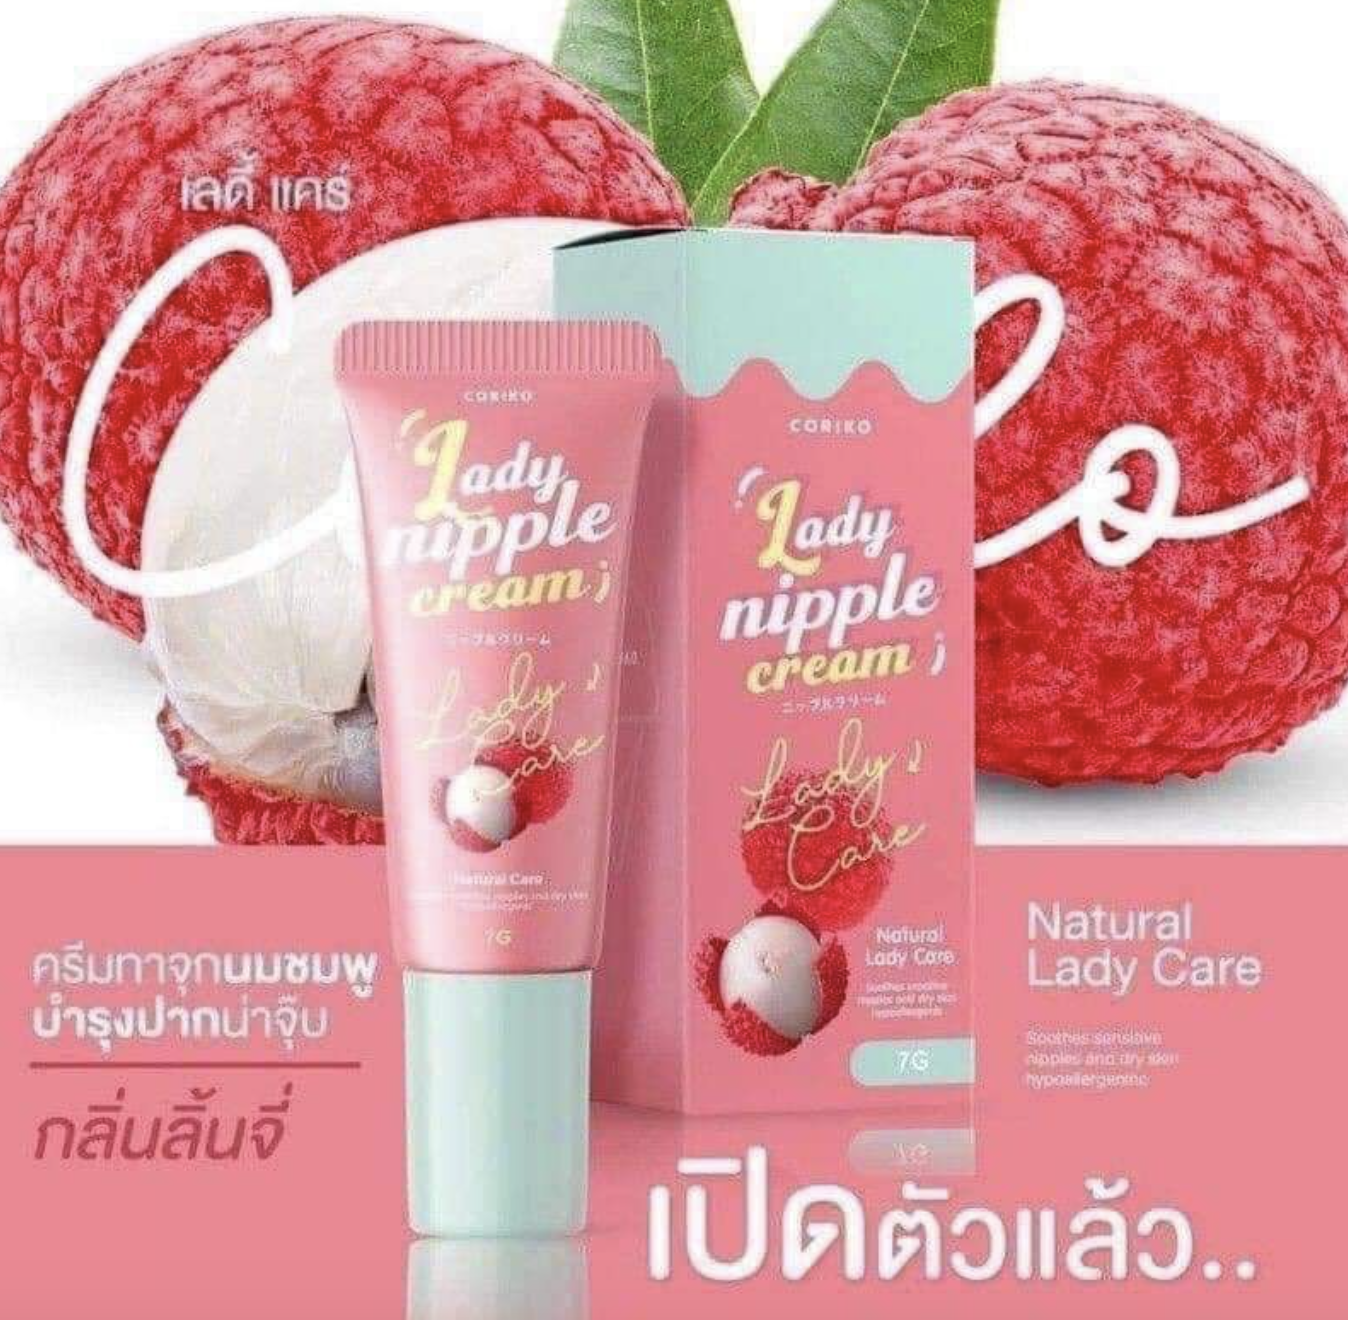 Coriko Lady Nipple Cream